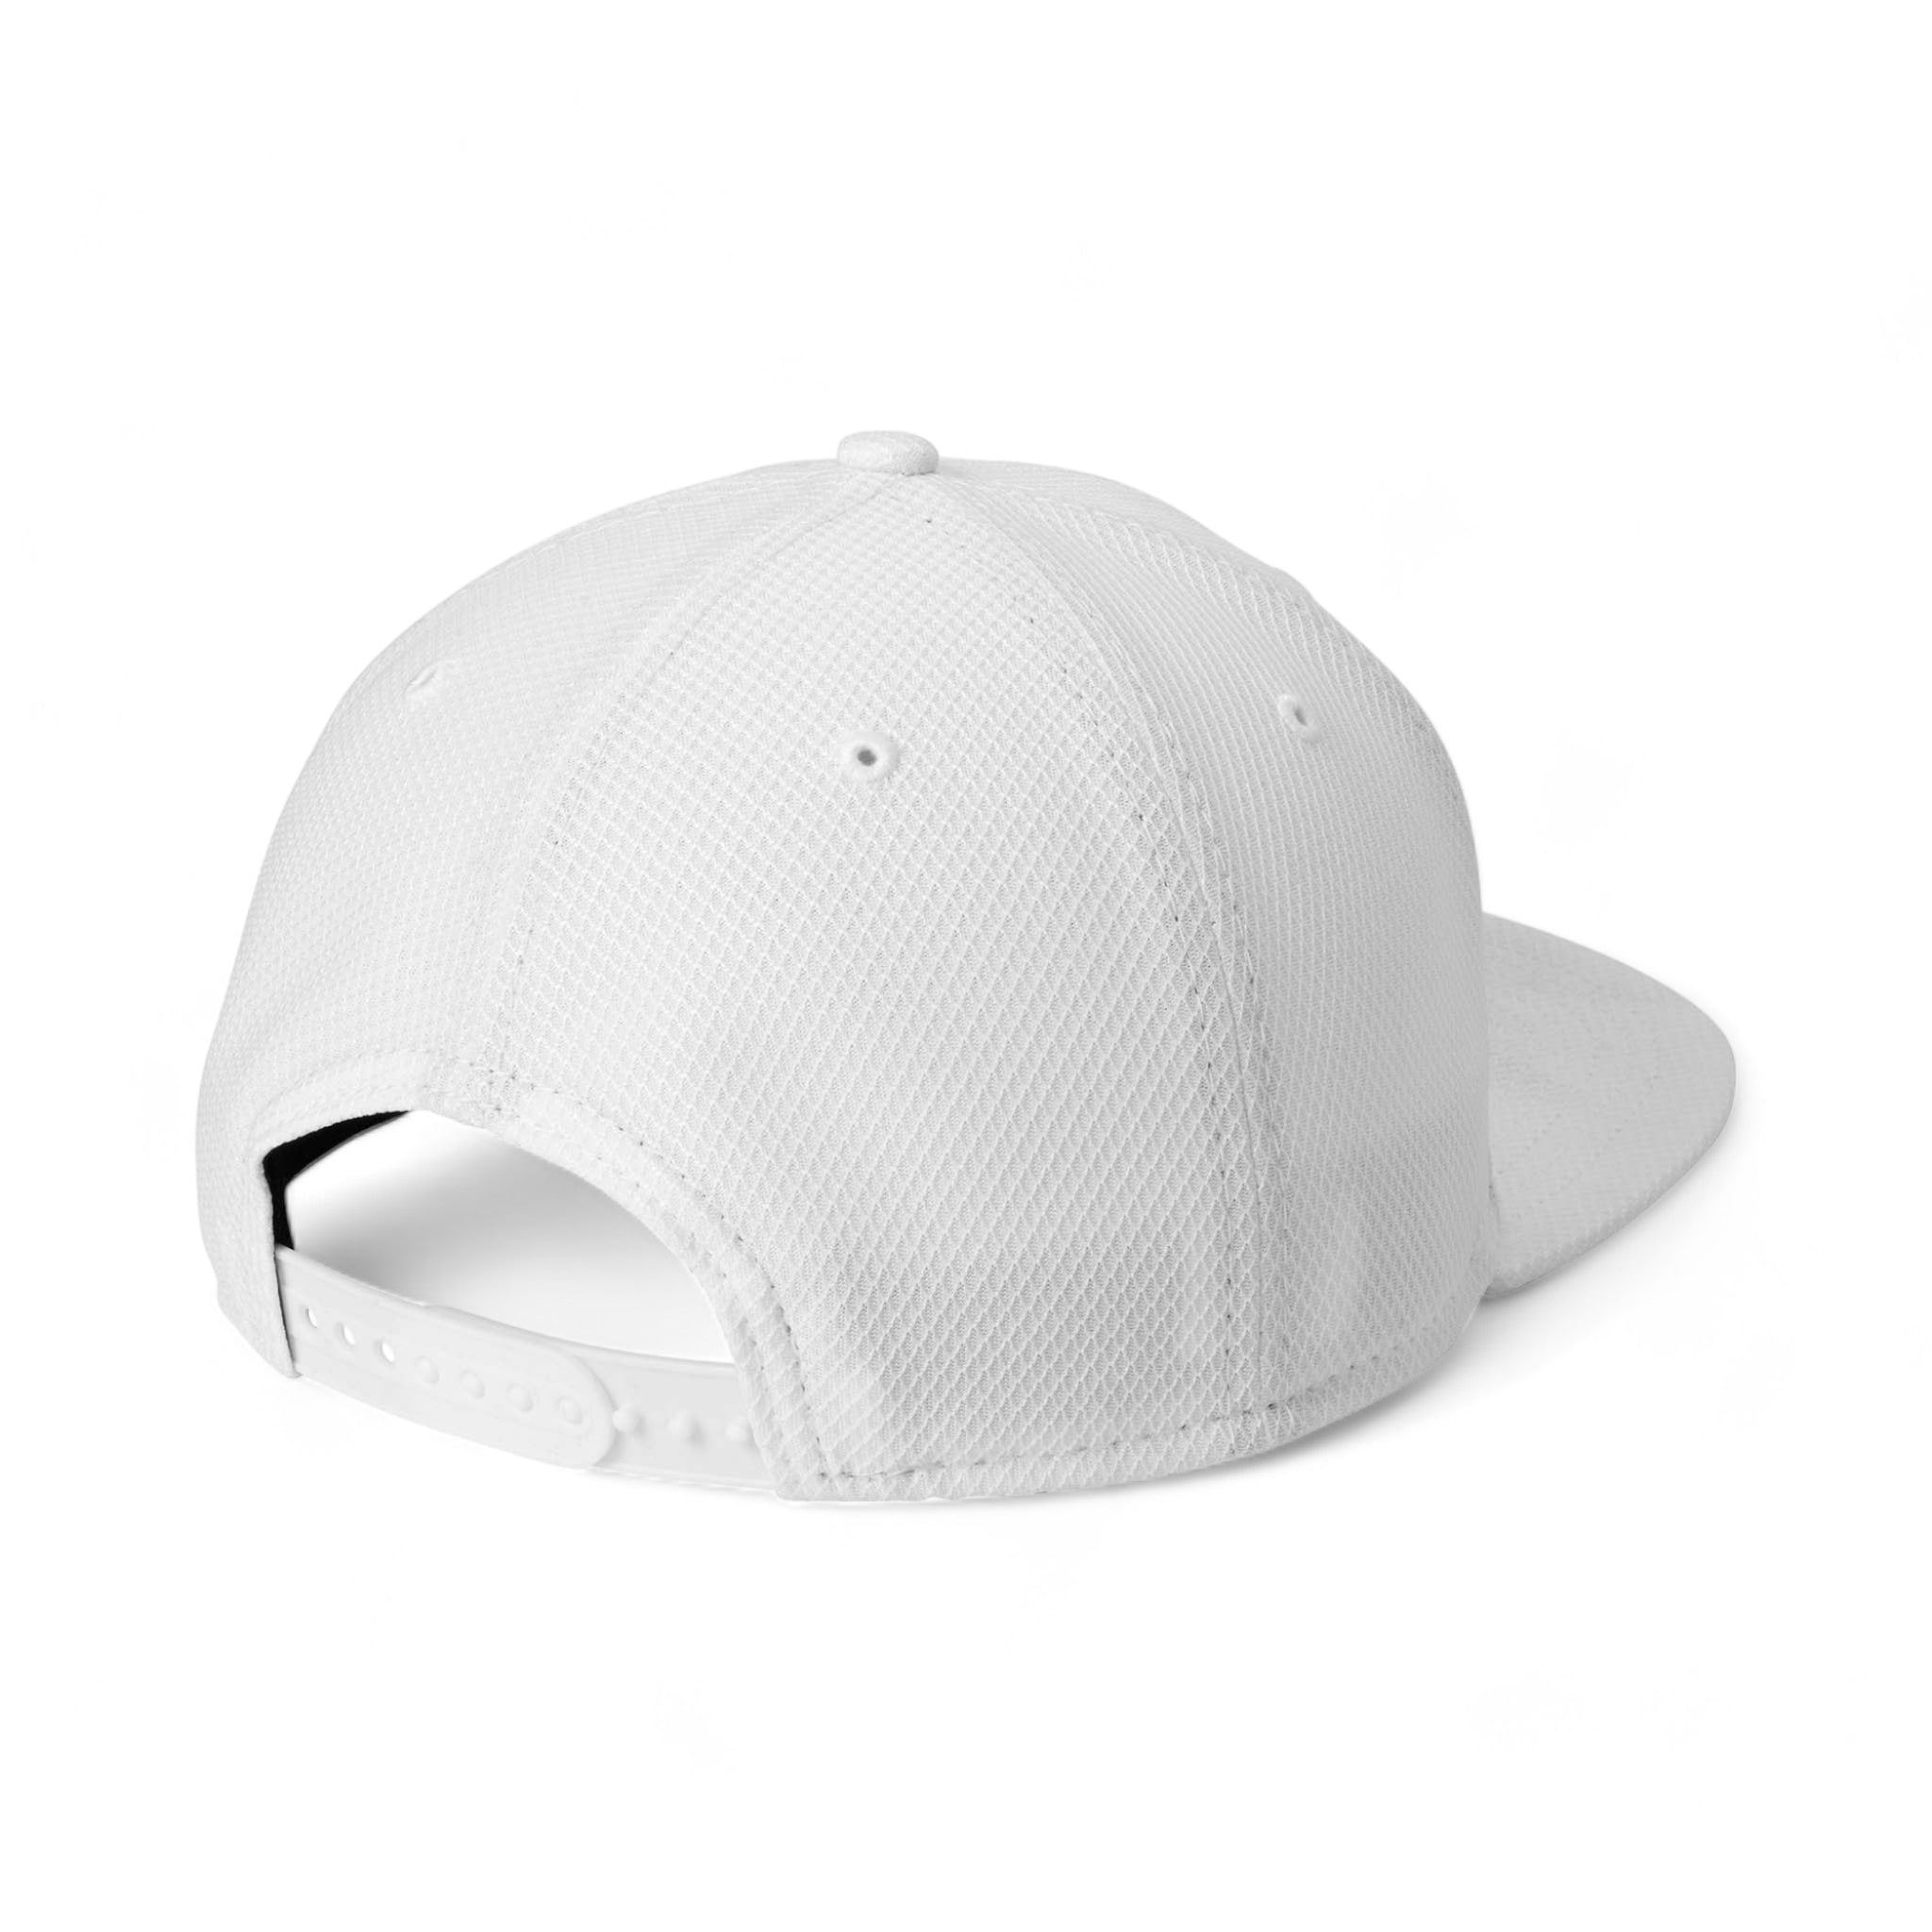 Back view of New Era NE404 custom hat in white